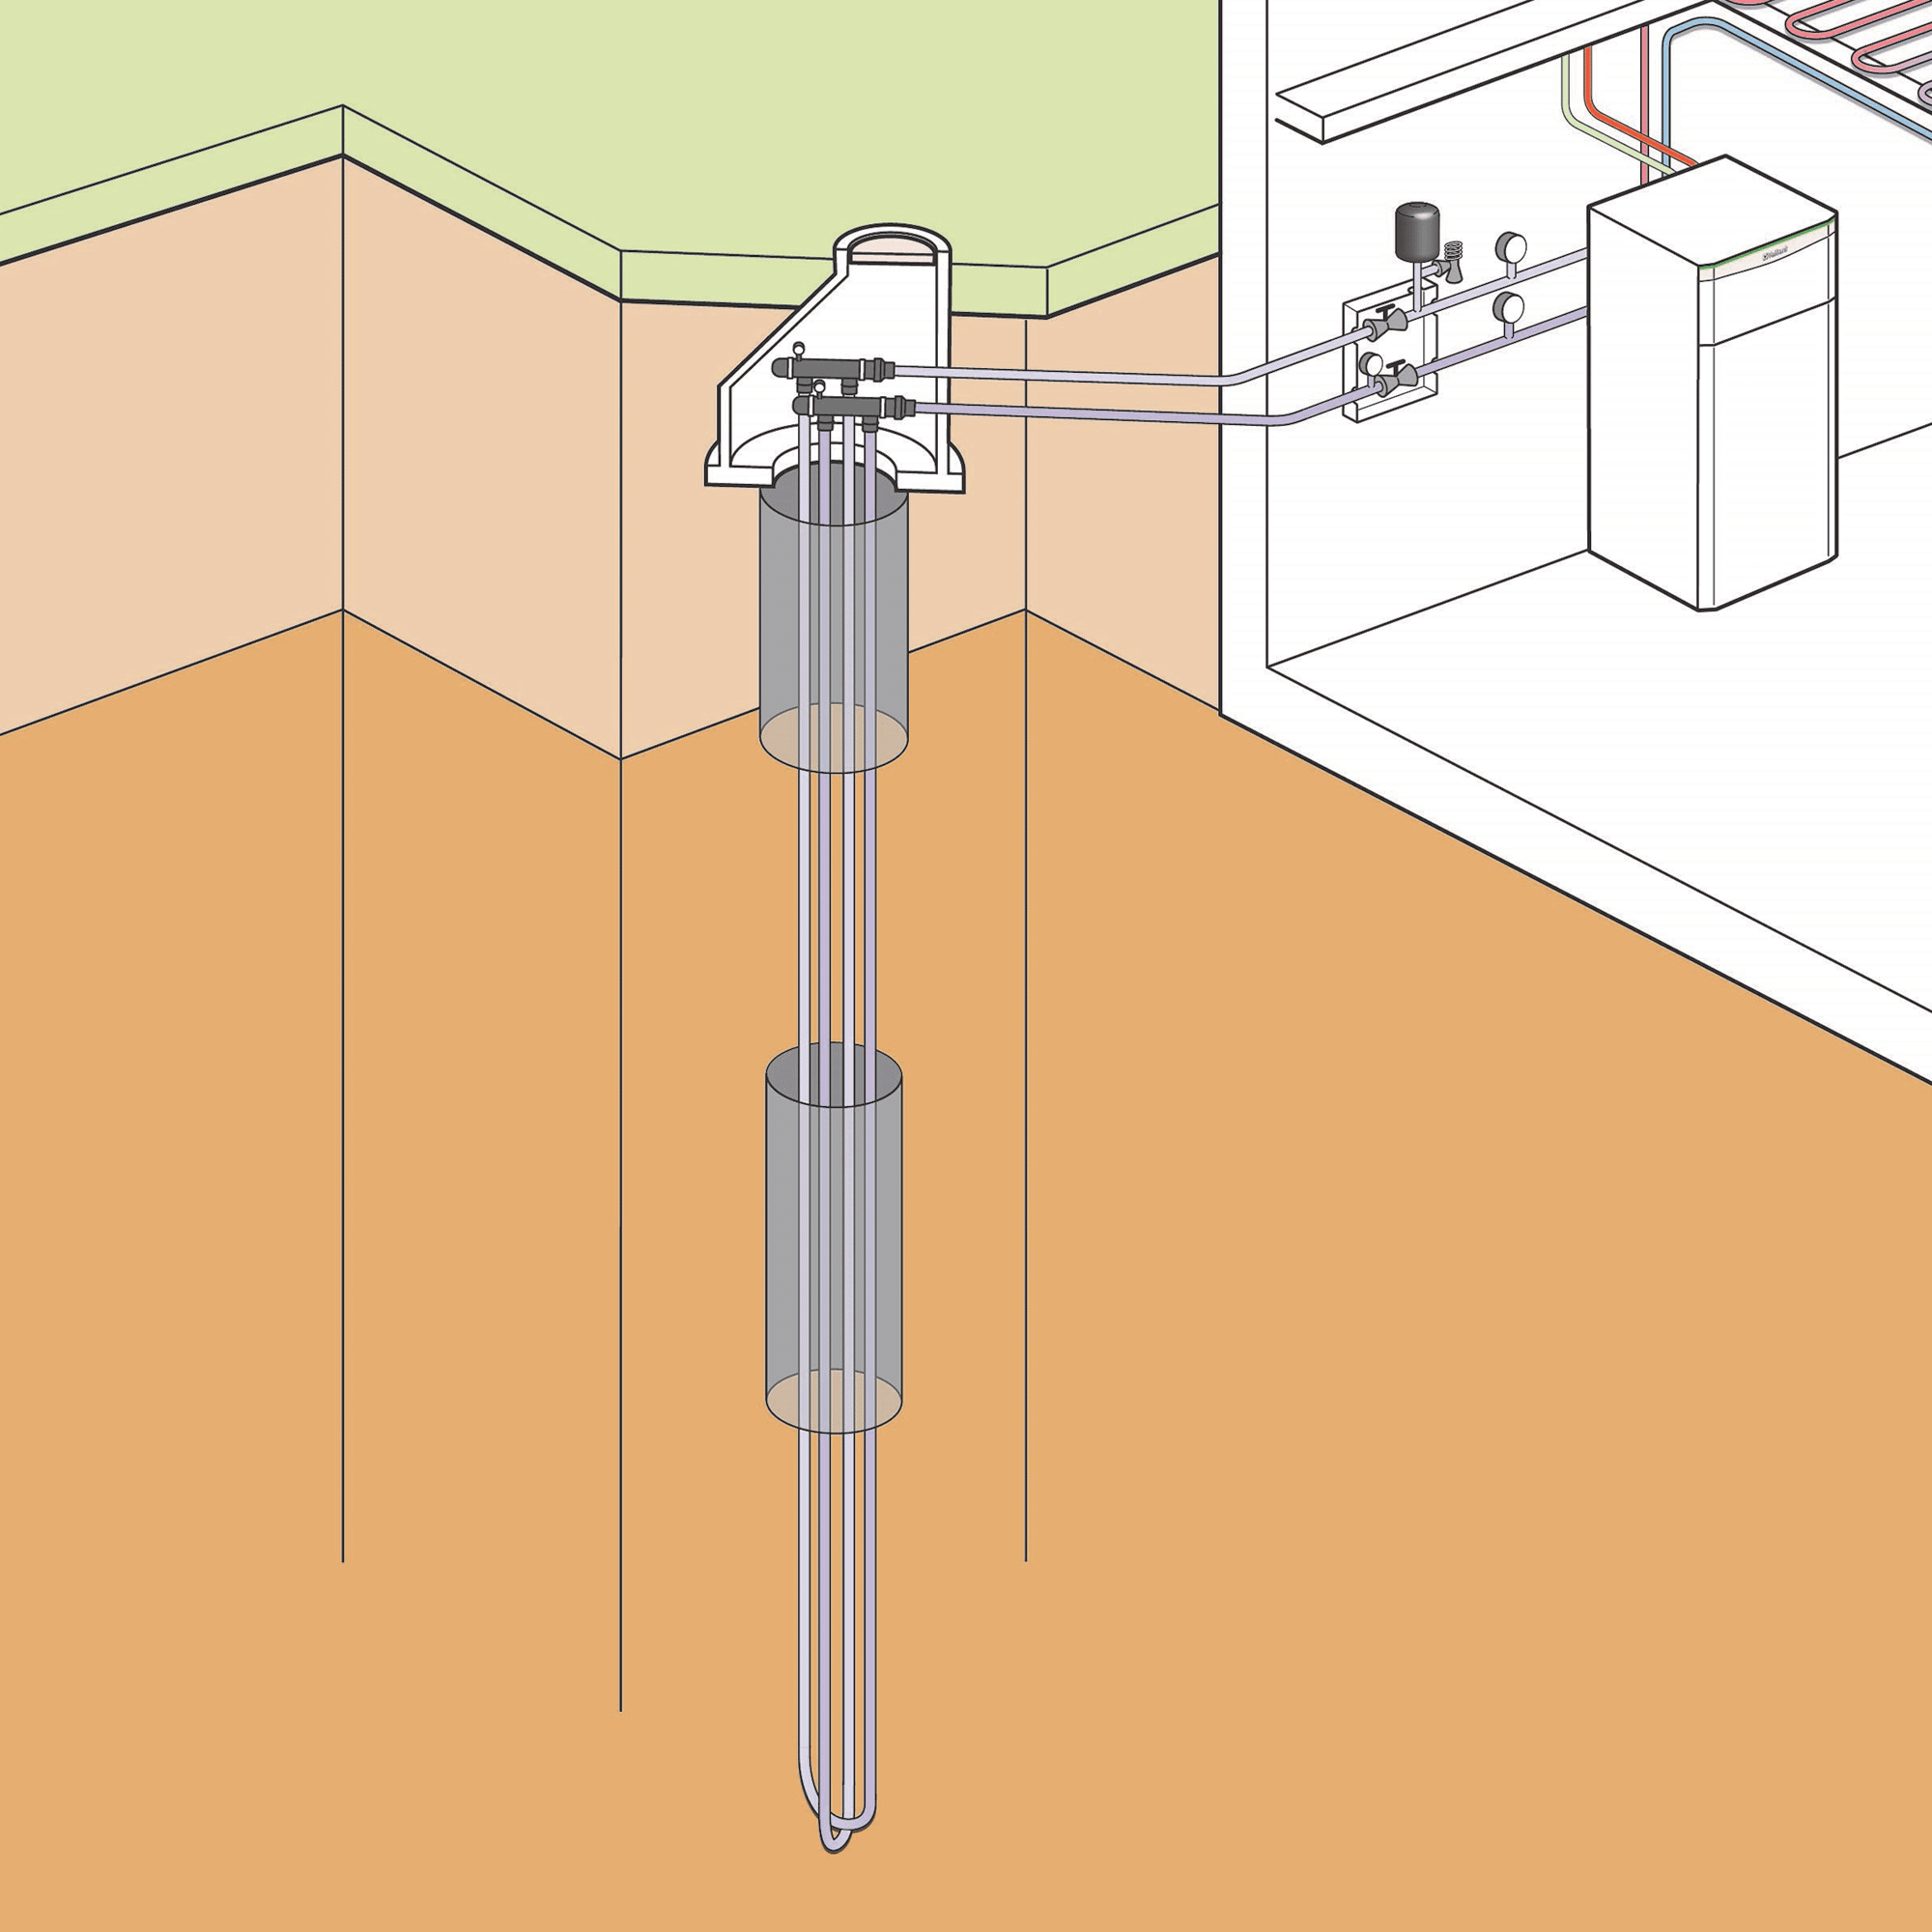 Diagram of a borehole ground source heat pump